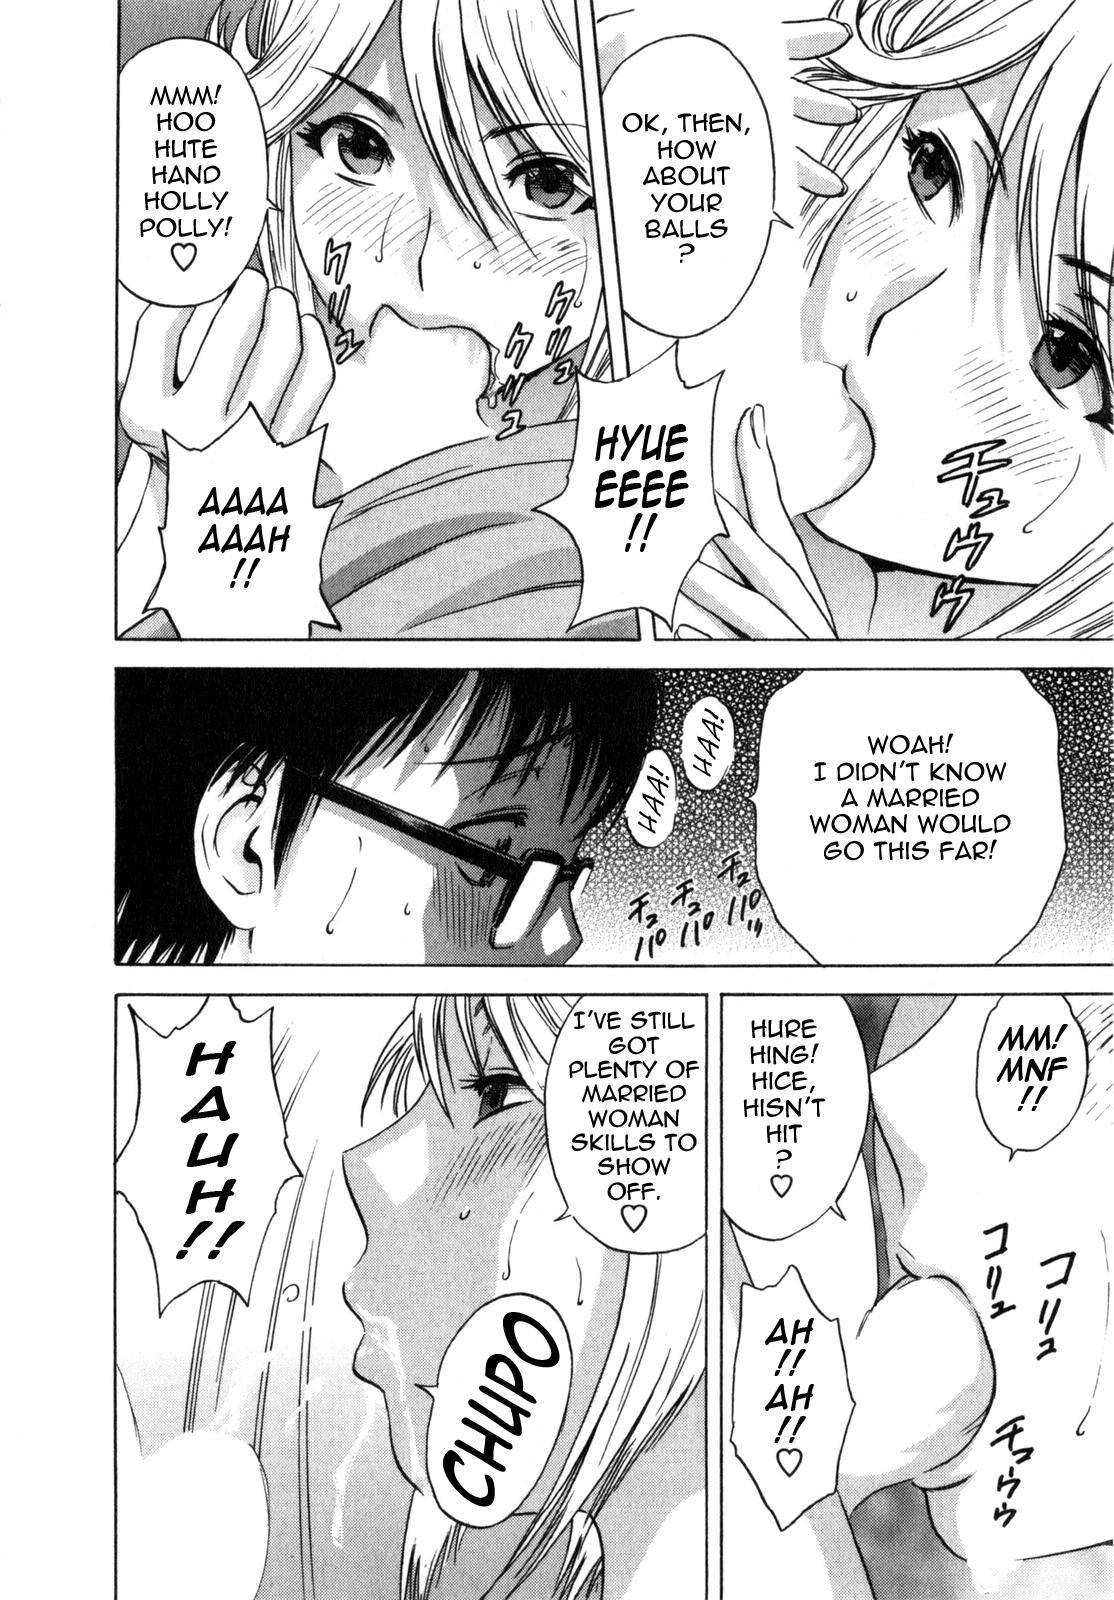 [Hidemaru] Life with Married Women Just Like a Manga 1 - Ch. 1-3 [English] {Tadanohito} 35